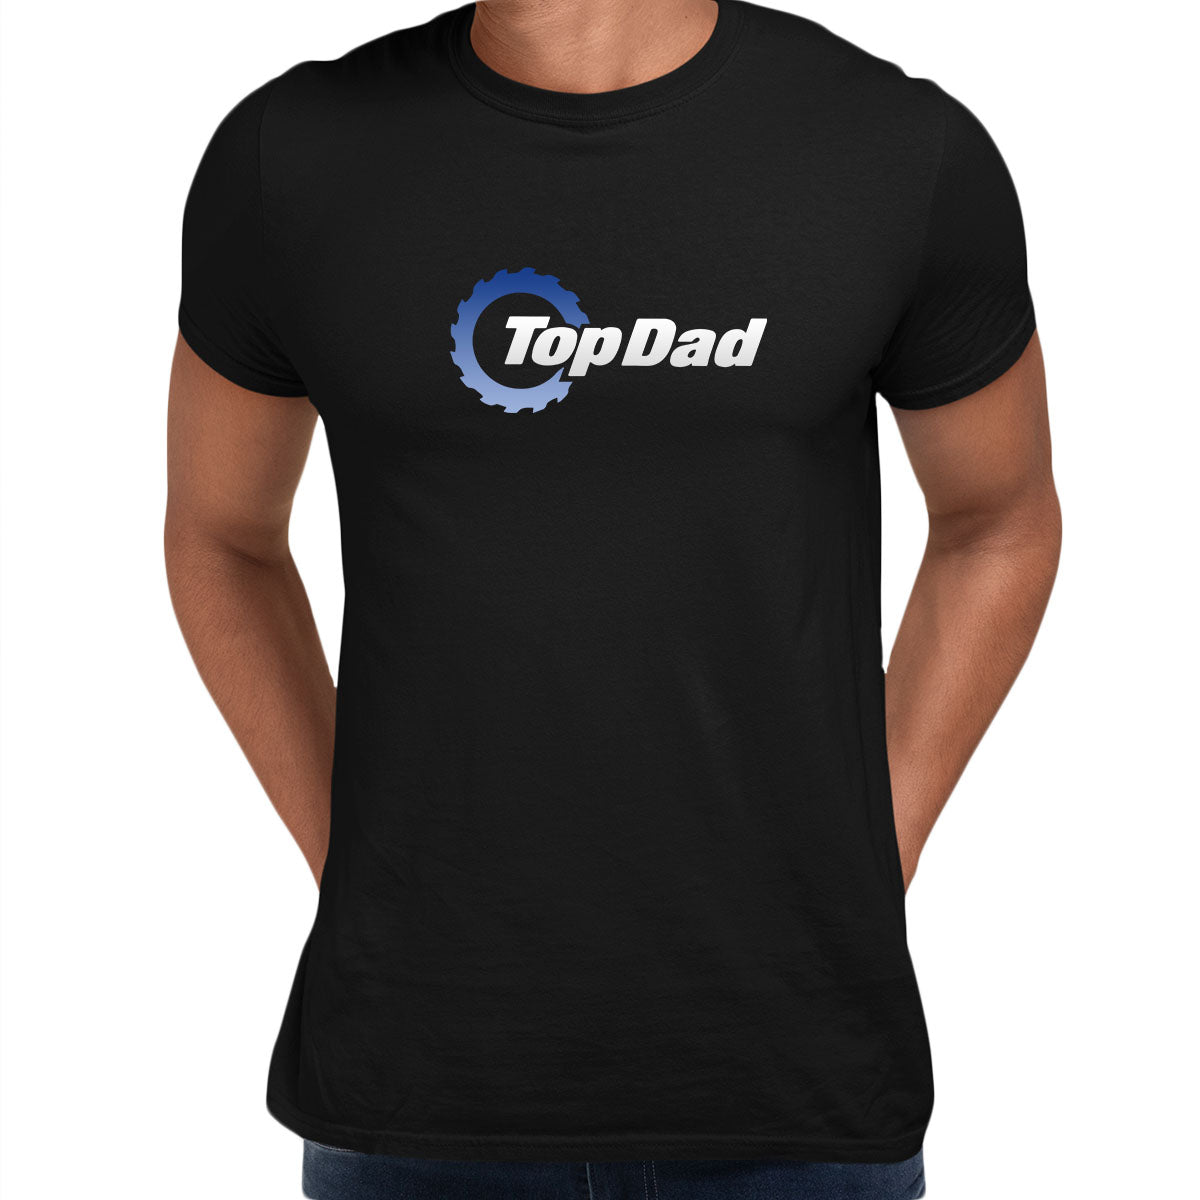 Top Dad Mens Funny T-Shirts novelty t shirts joke t-shirt clothing birthday tee - Kuzi Tees